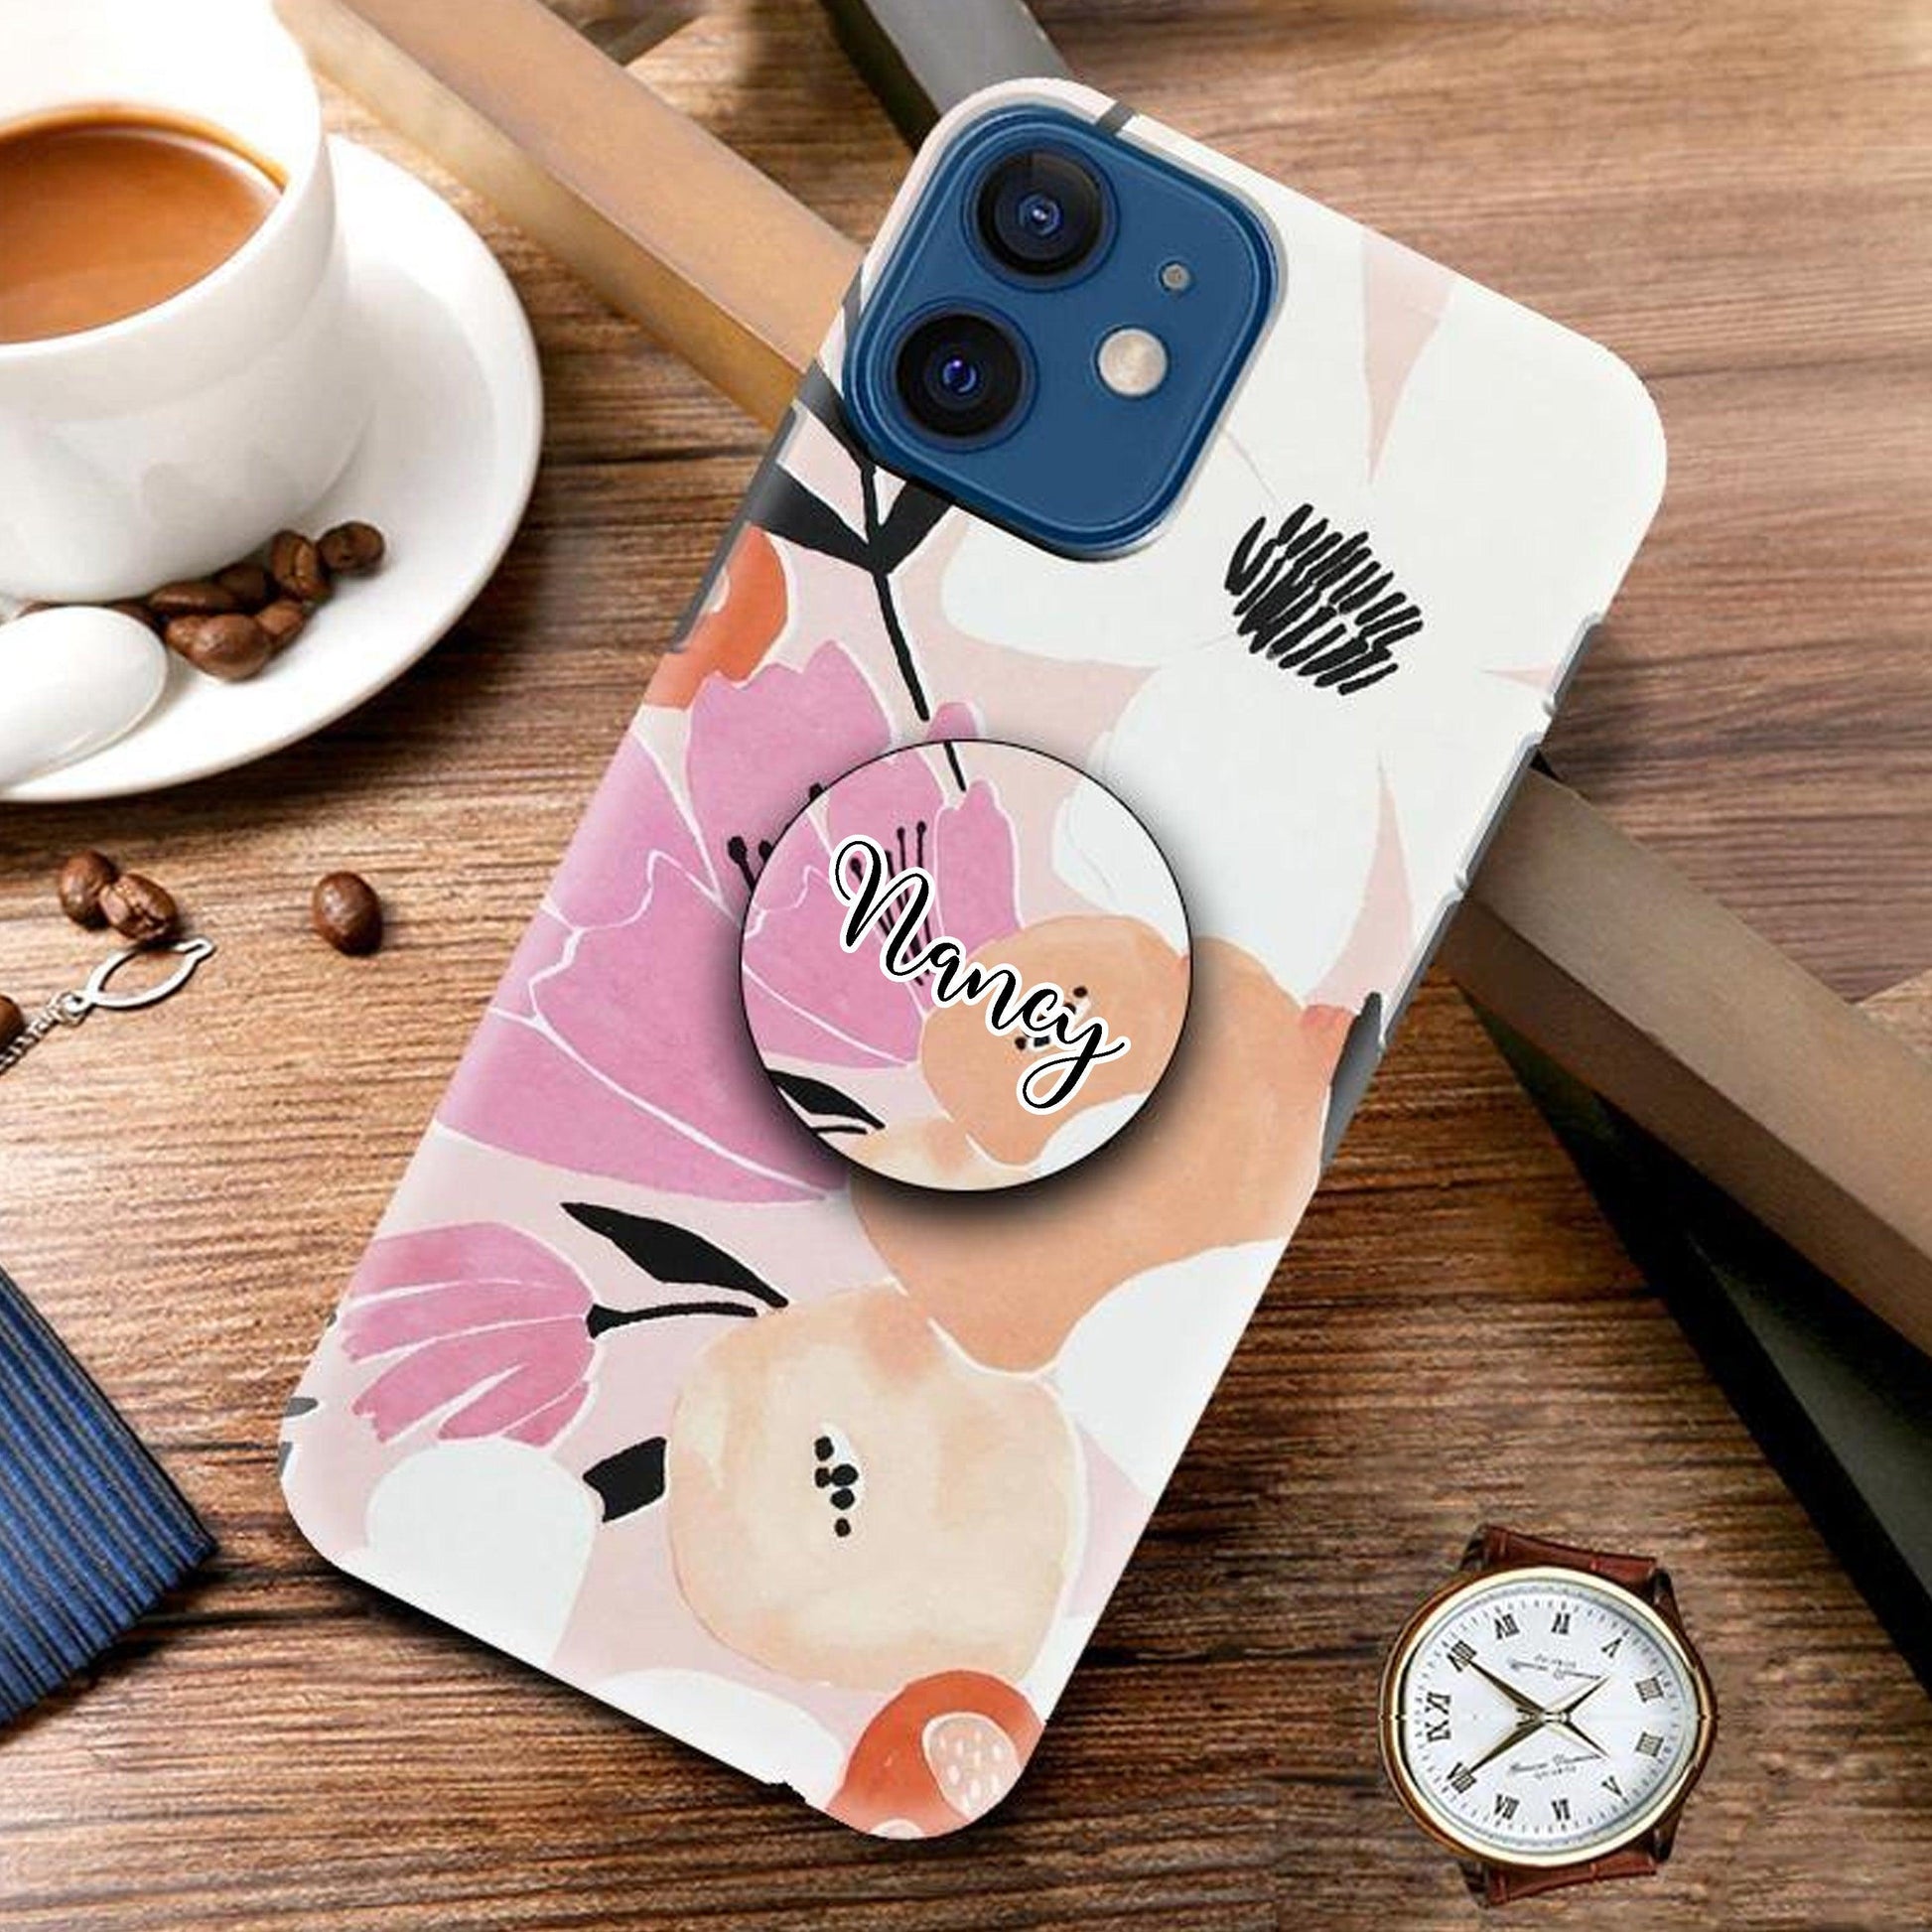 Colorful Floral Art Phone Cover Case ShopOnCliQ